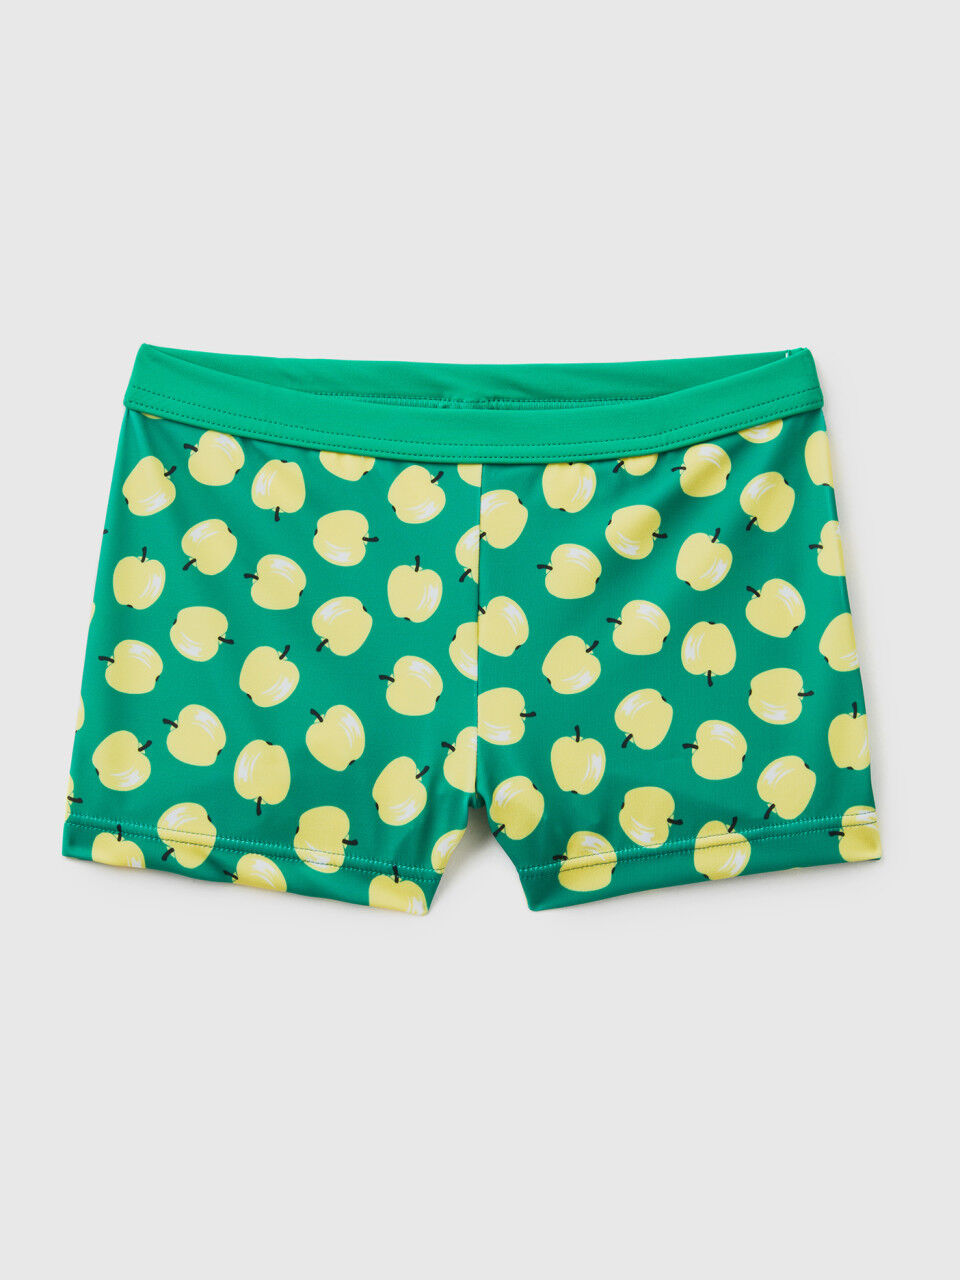 Green swim trunks with apple pattern